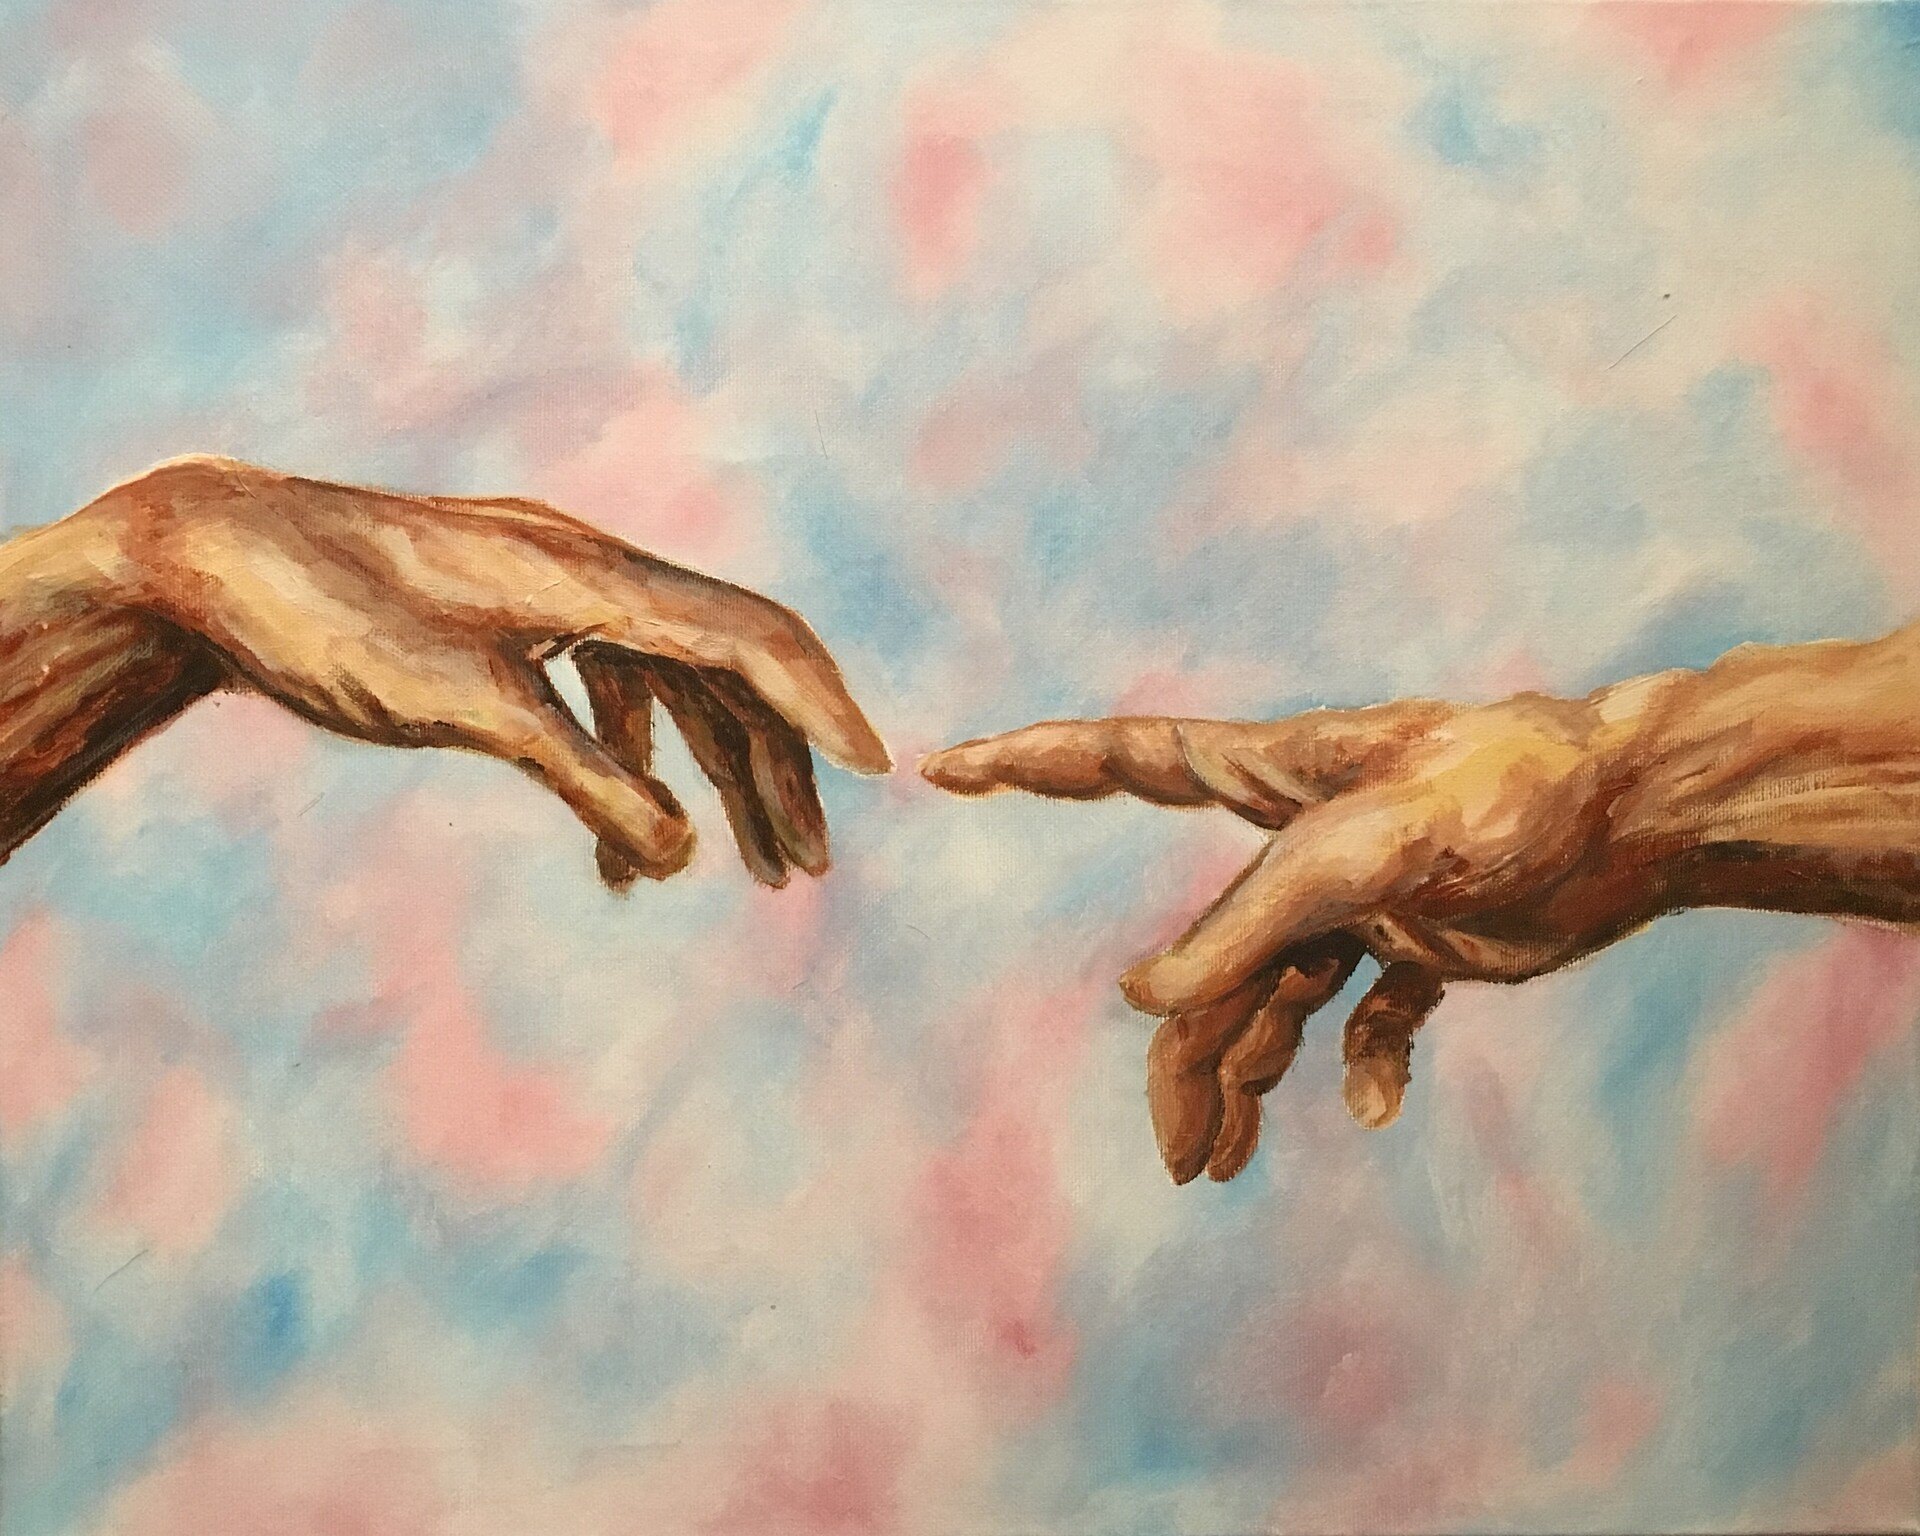 Л н на руках. Микеланджело Сотворение Адама руки. Сотворение Адама Микеланджело Эстетика. Сотворение Адама руки Эстетика. Микеланджело Сотворение Адама две руки.